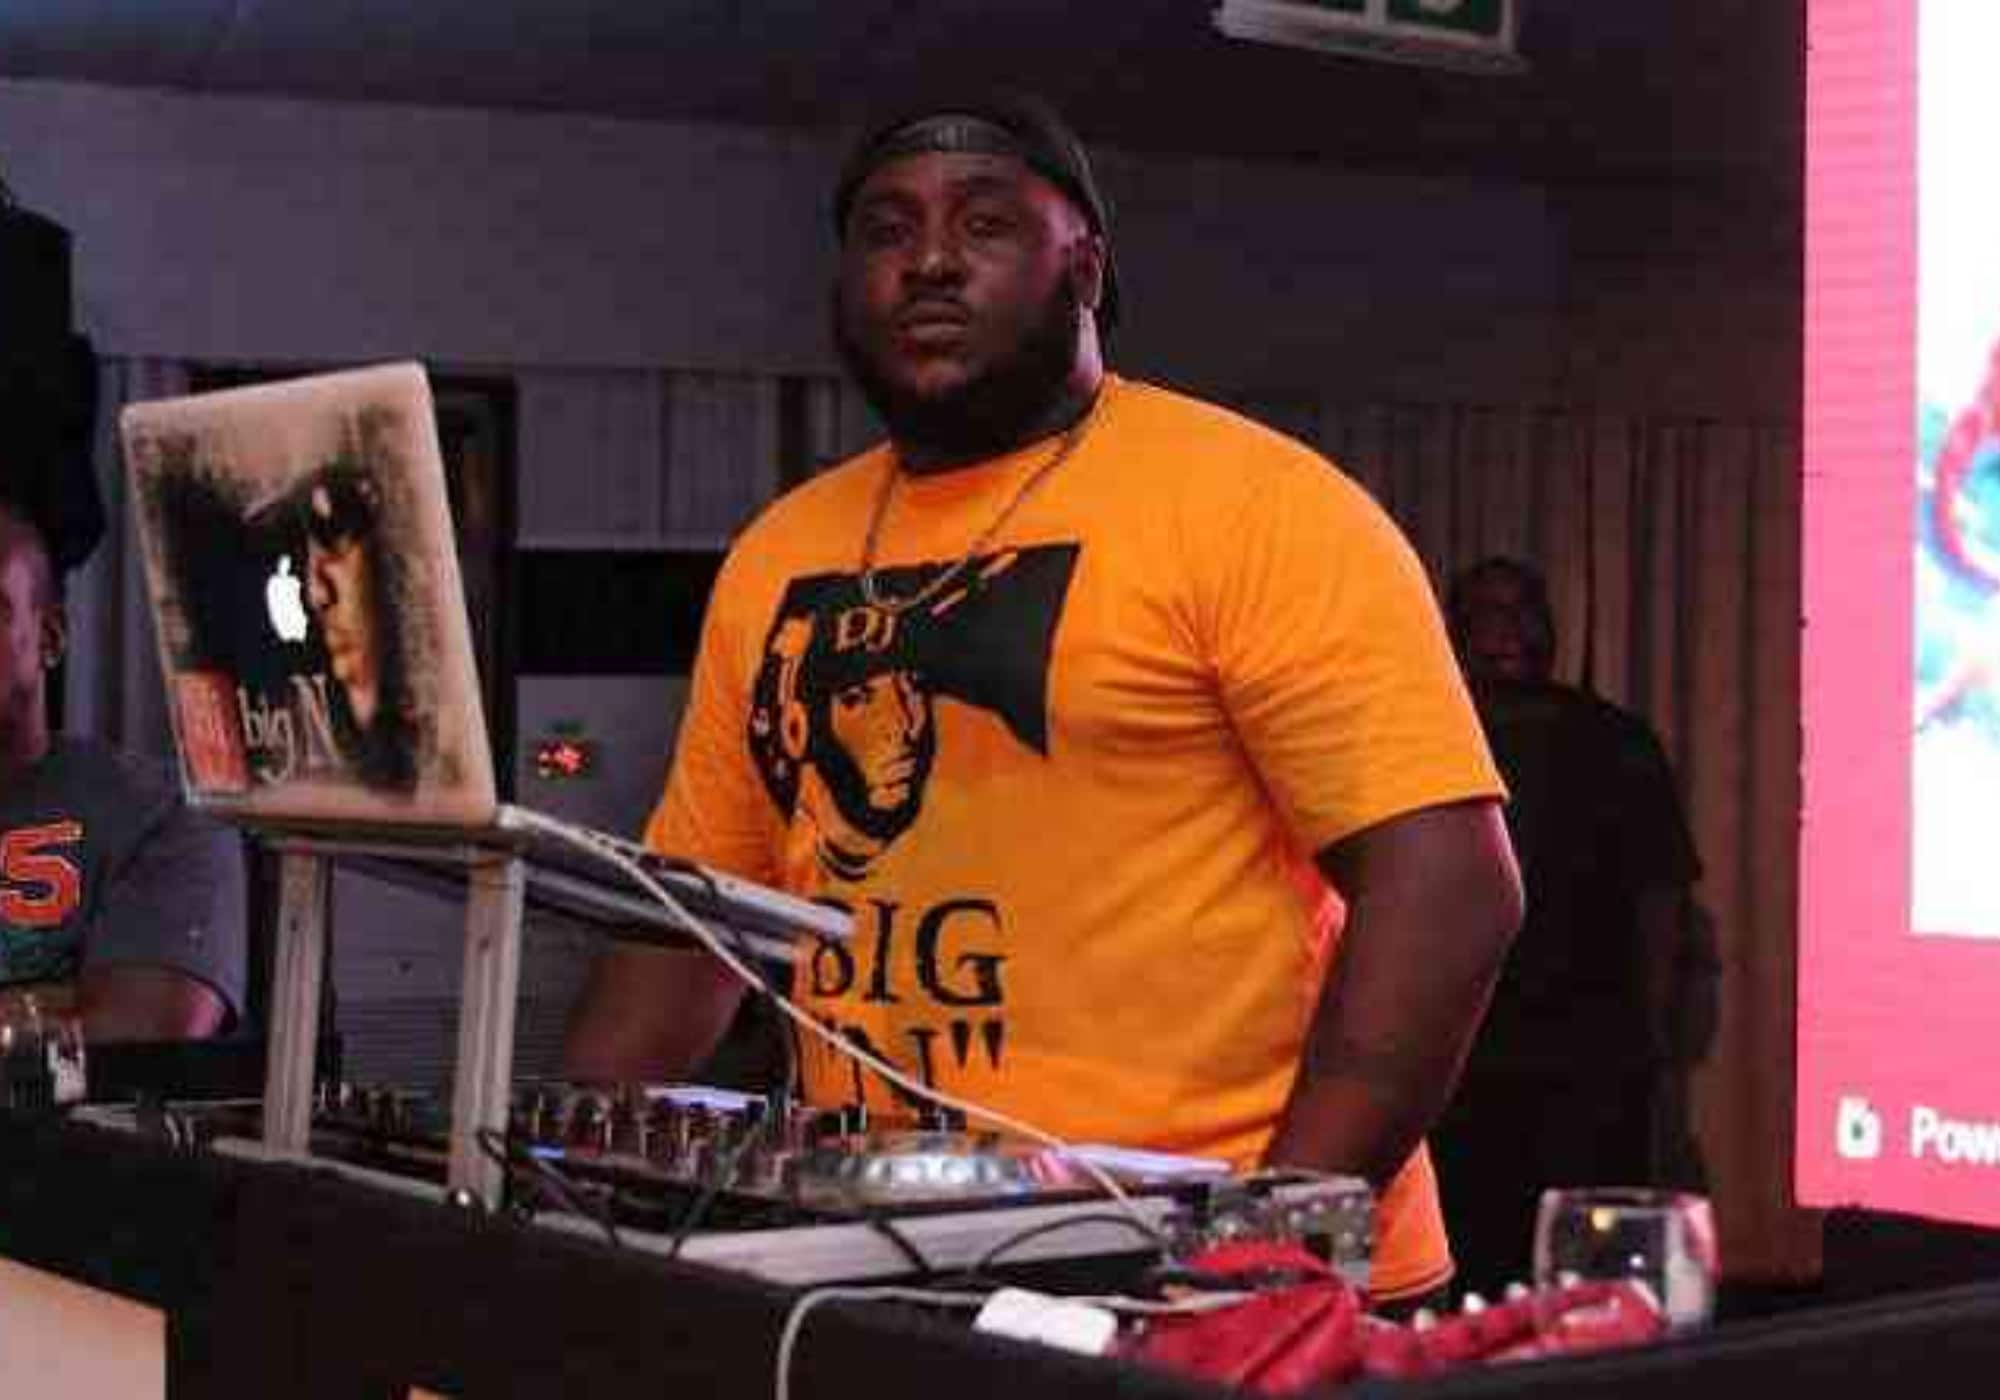 Almost Every Lagos Babe Has Done Yansh – DJ BigN